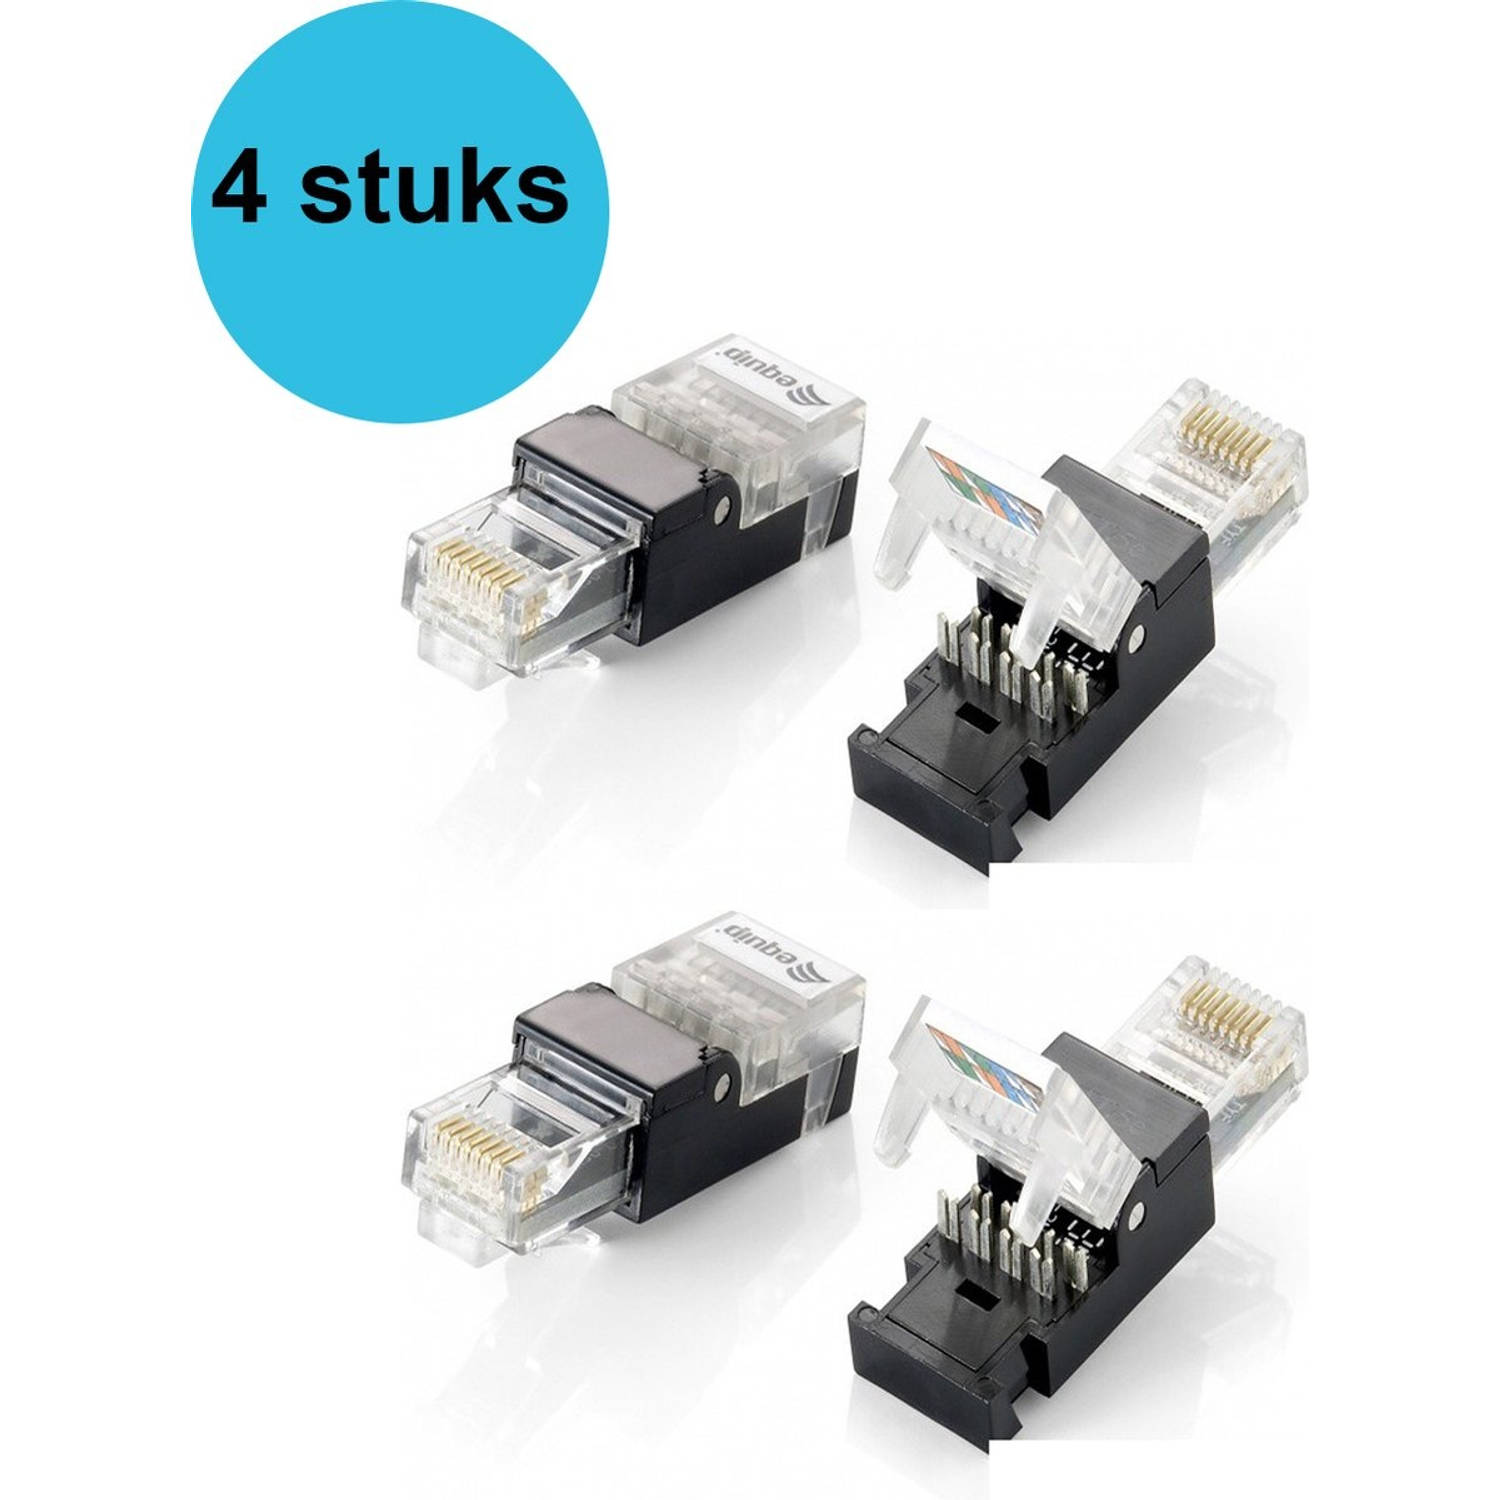 4 stuks kabel-connector RJ-45 Zwart, Transparant RJ45 connectoren - Stekker - Connector - Cat5E - Cat6 - Plugs - Connector stekker - UTP - Ethernet - Internet plug - Netwerkstekker